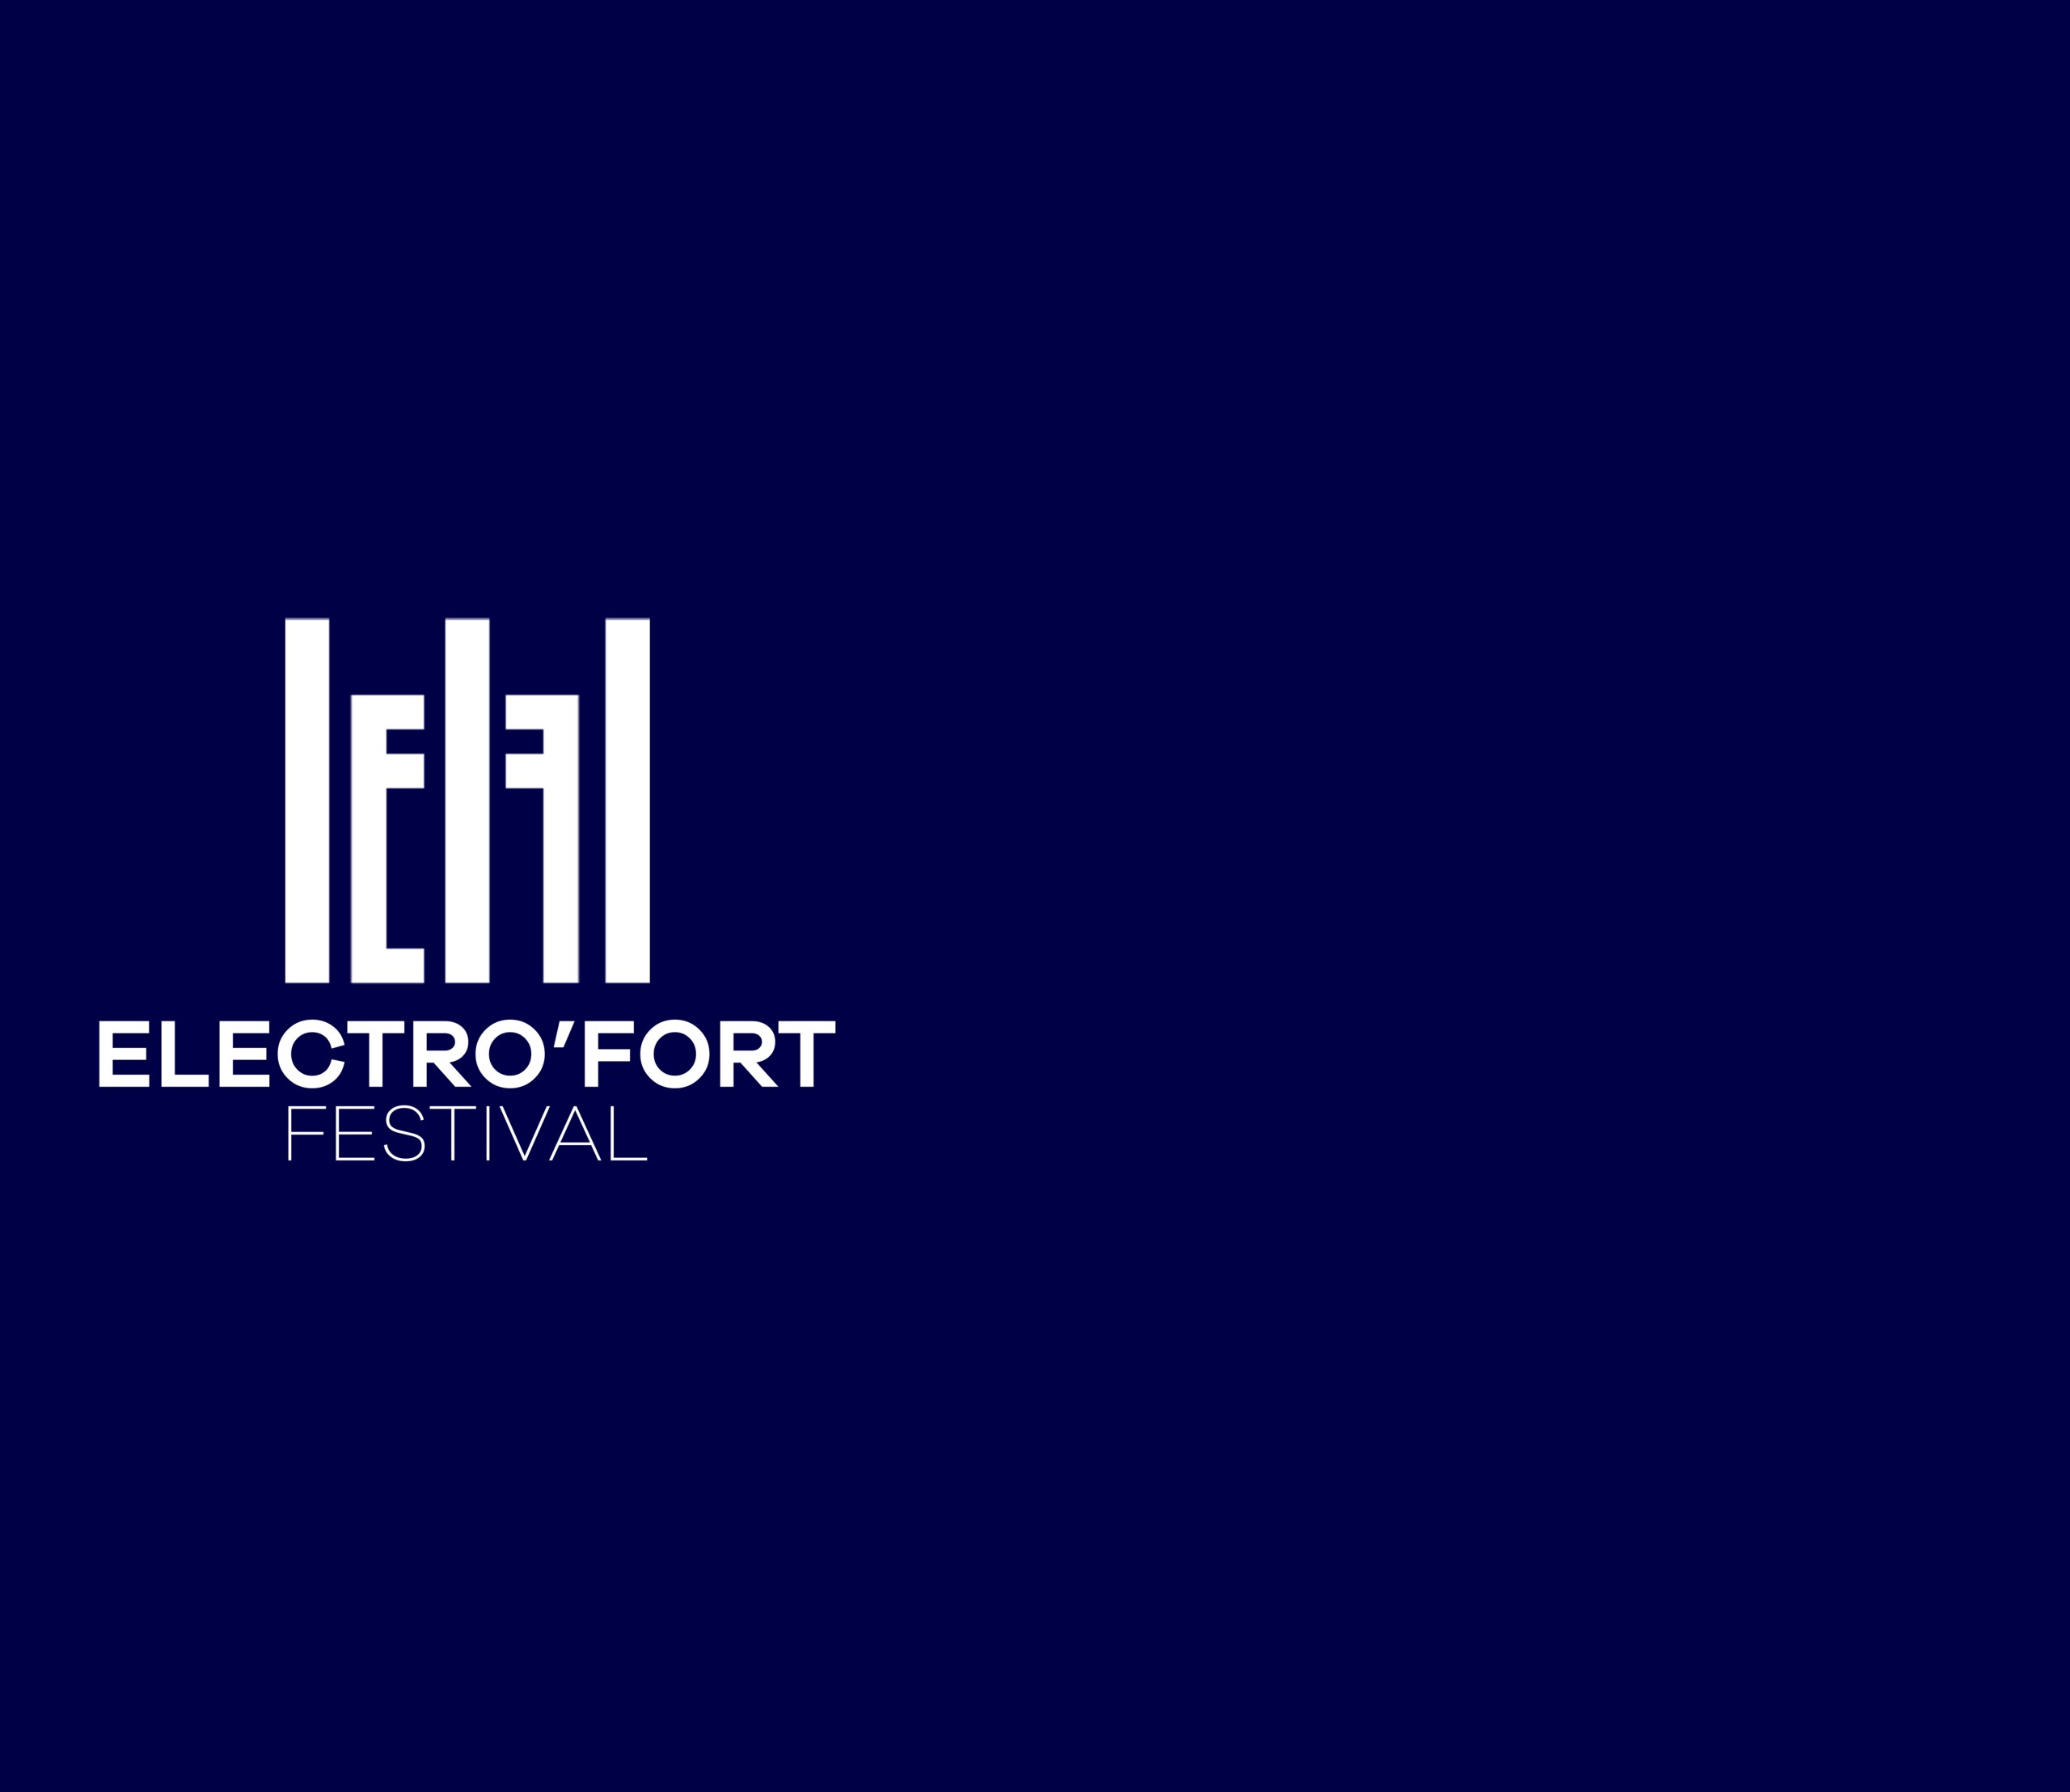 Electro’Fort Festival